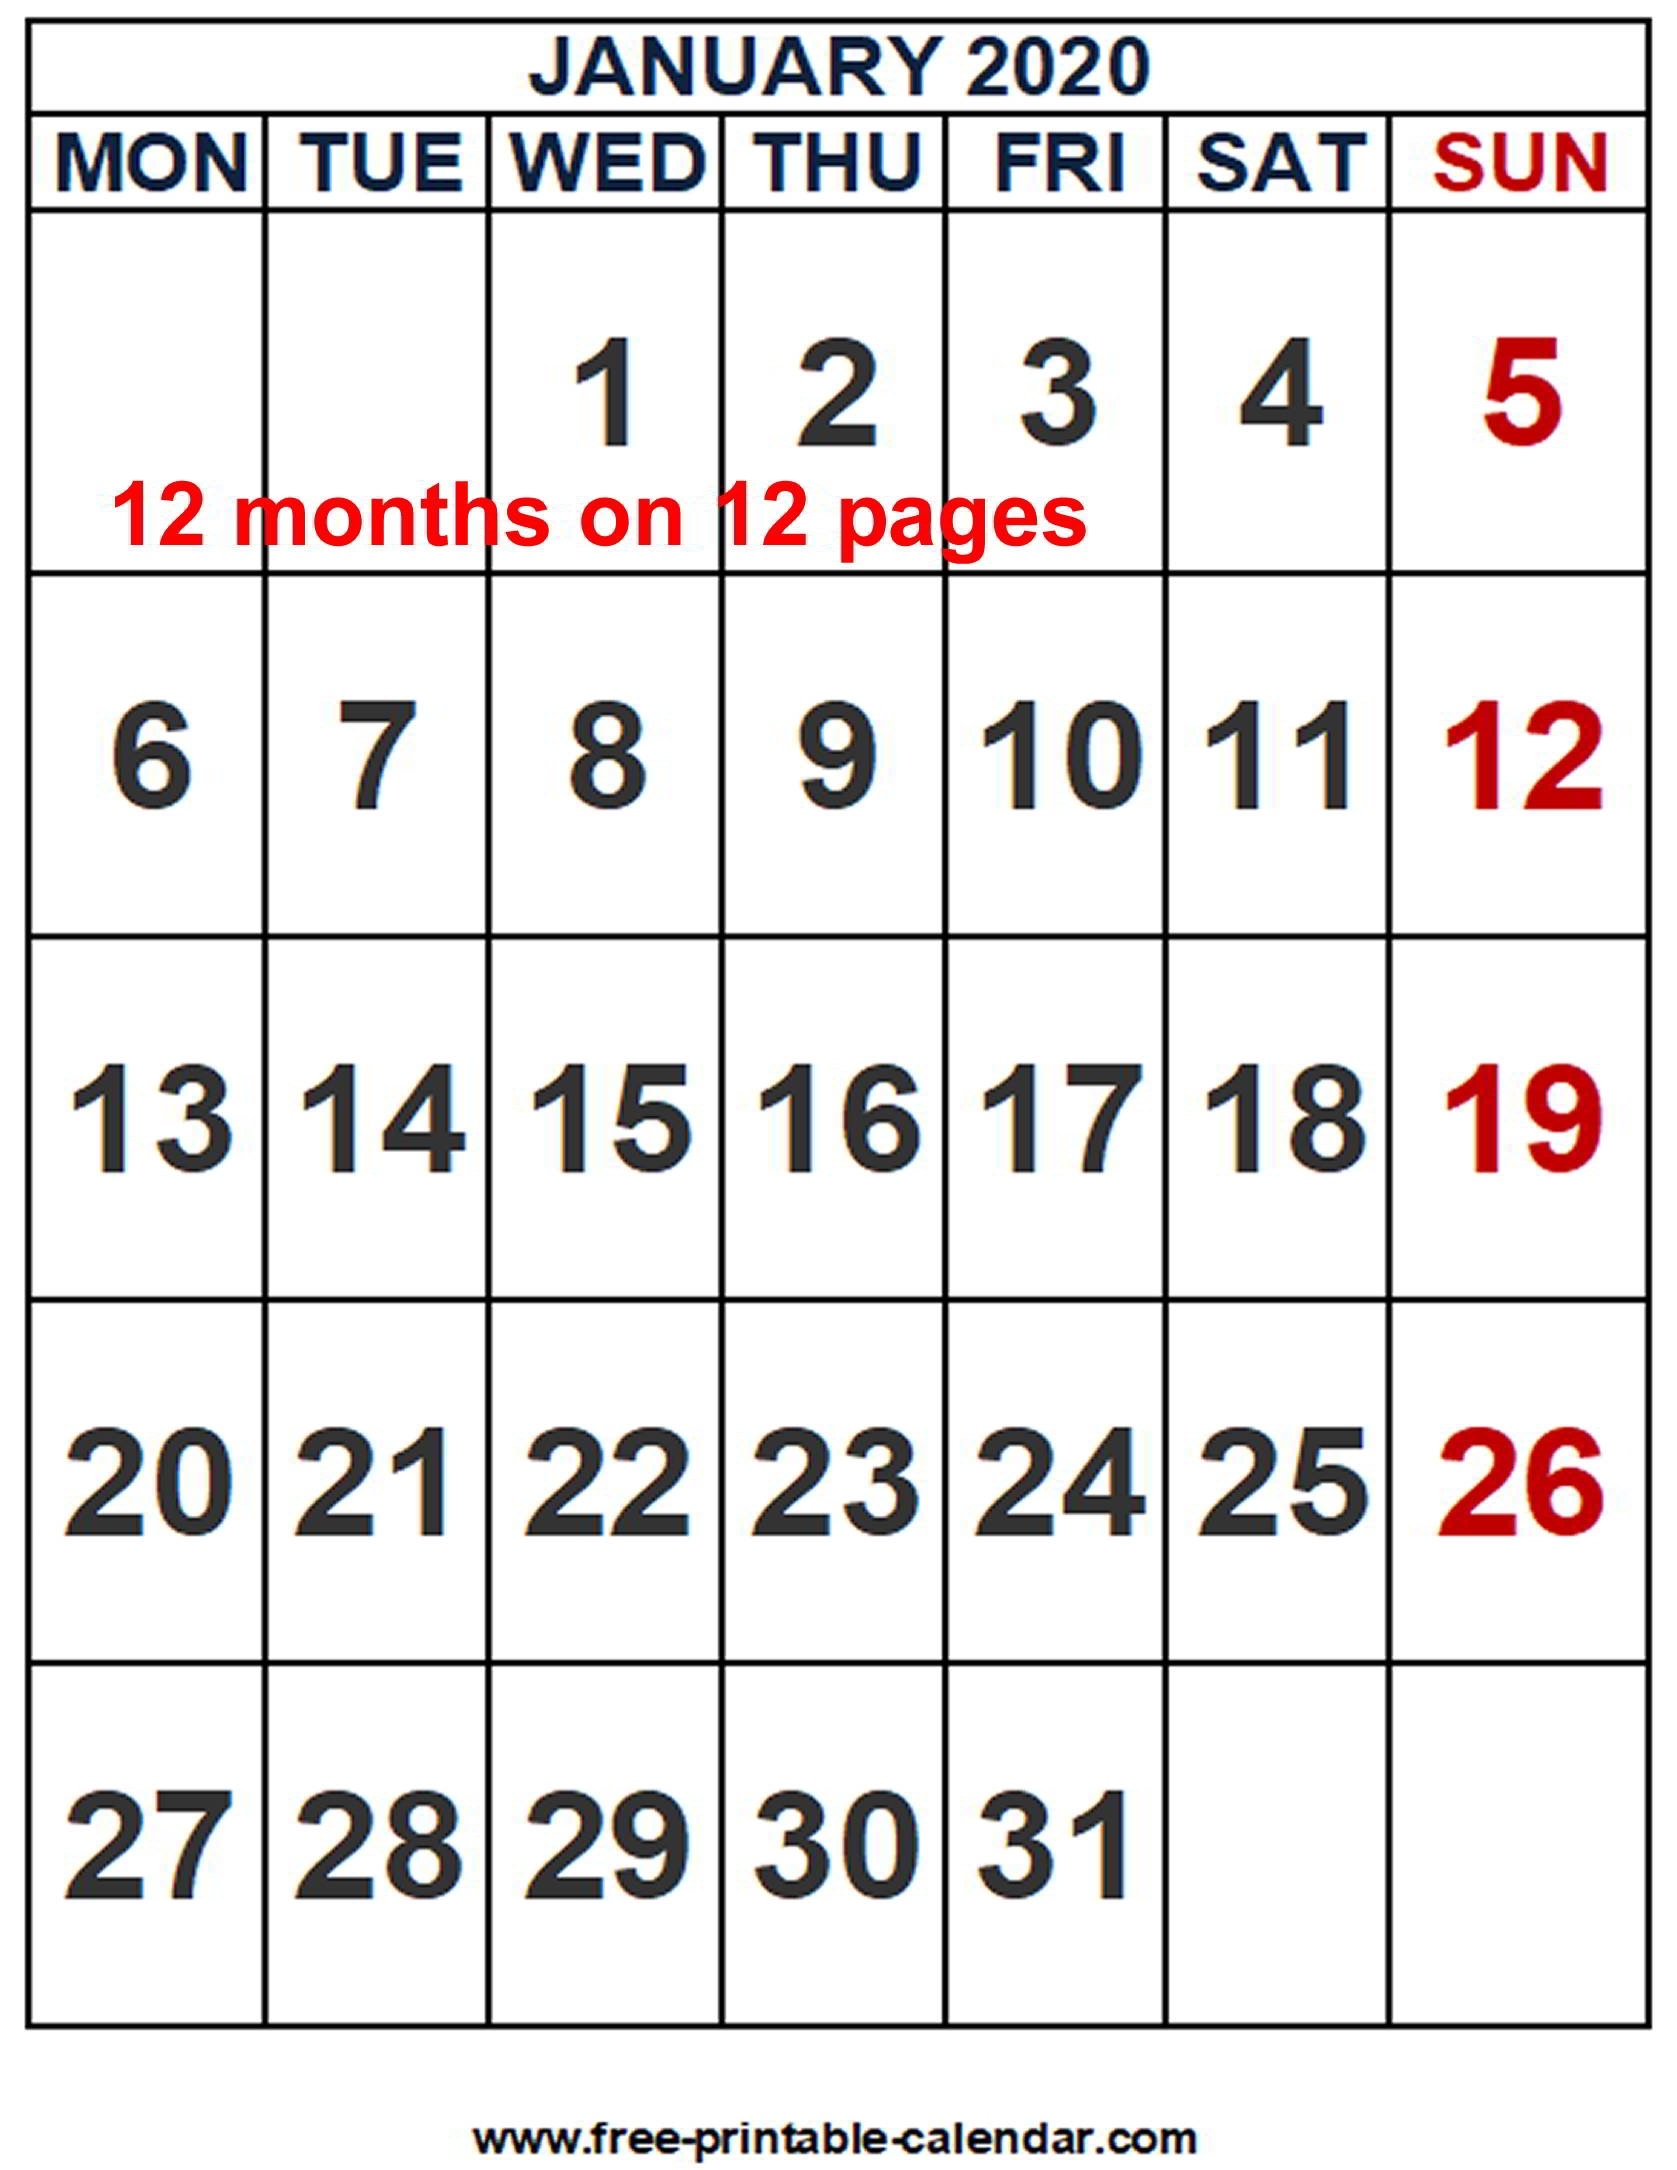 2020 Calendar Word Template - Free-Printable-Calendar Perky Free Microsoft Calendar 2020 Printable